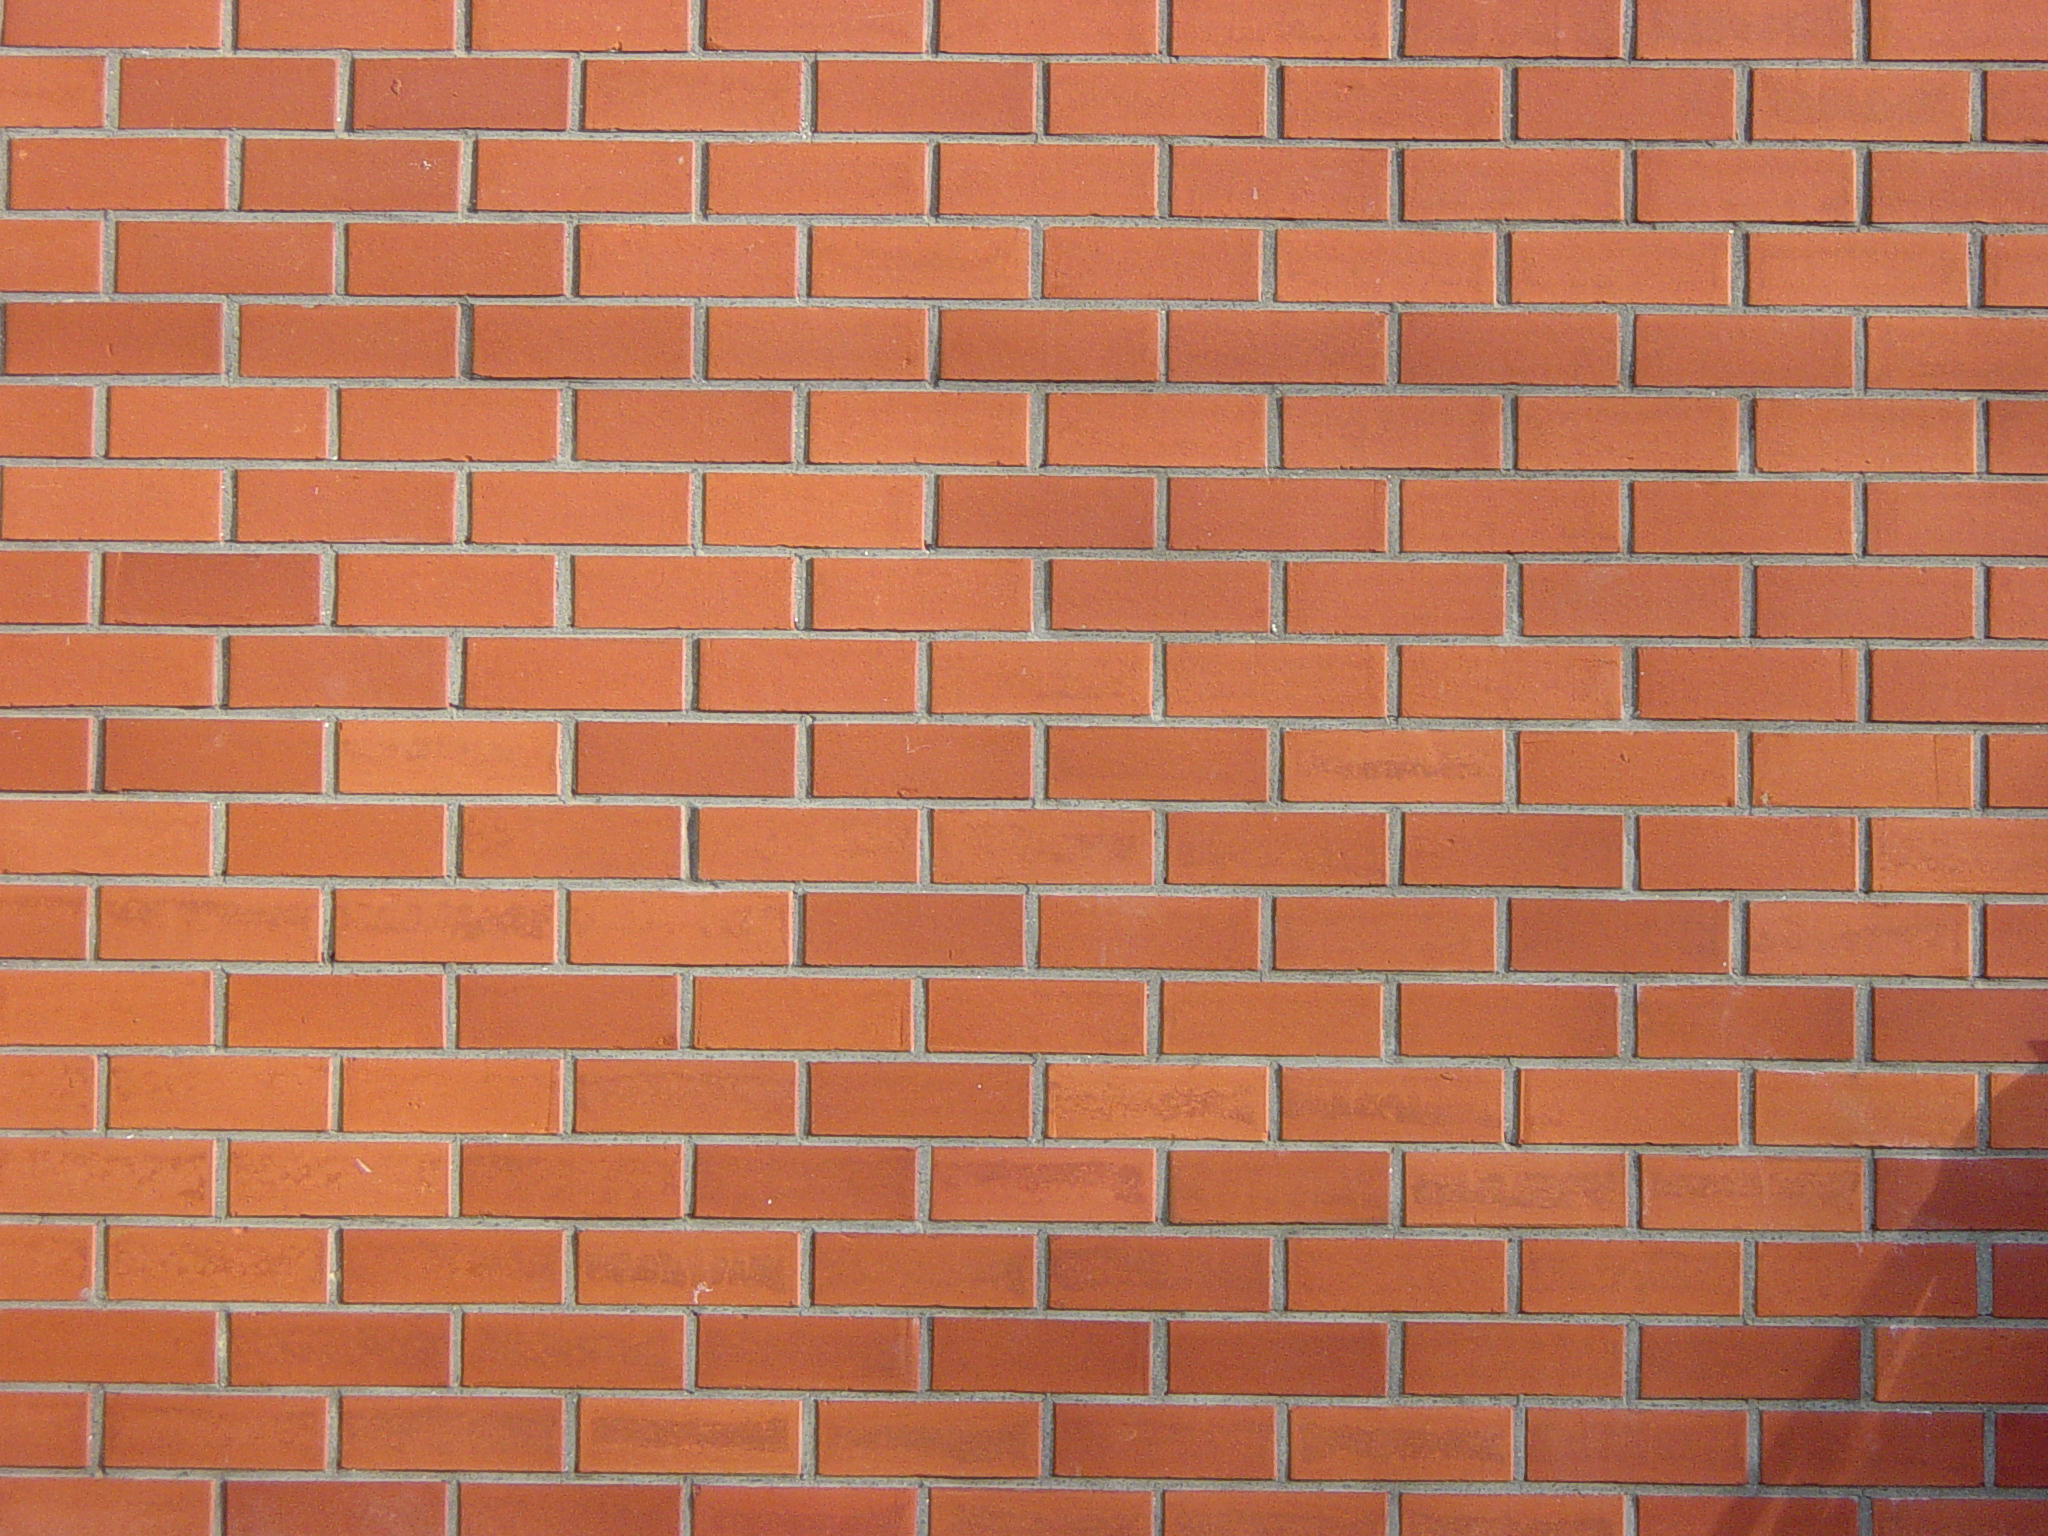 Brick Wall By Ashzstock